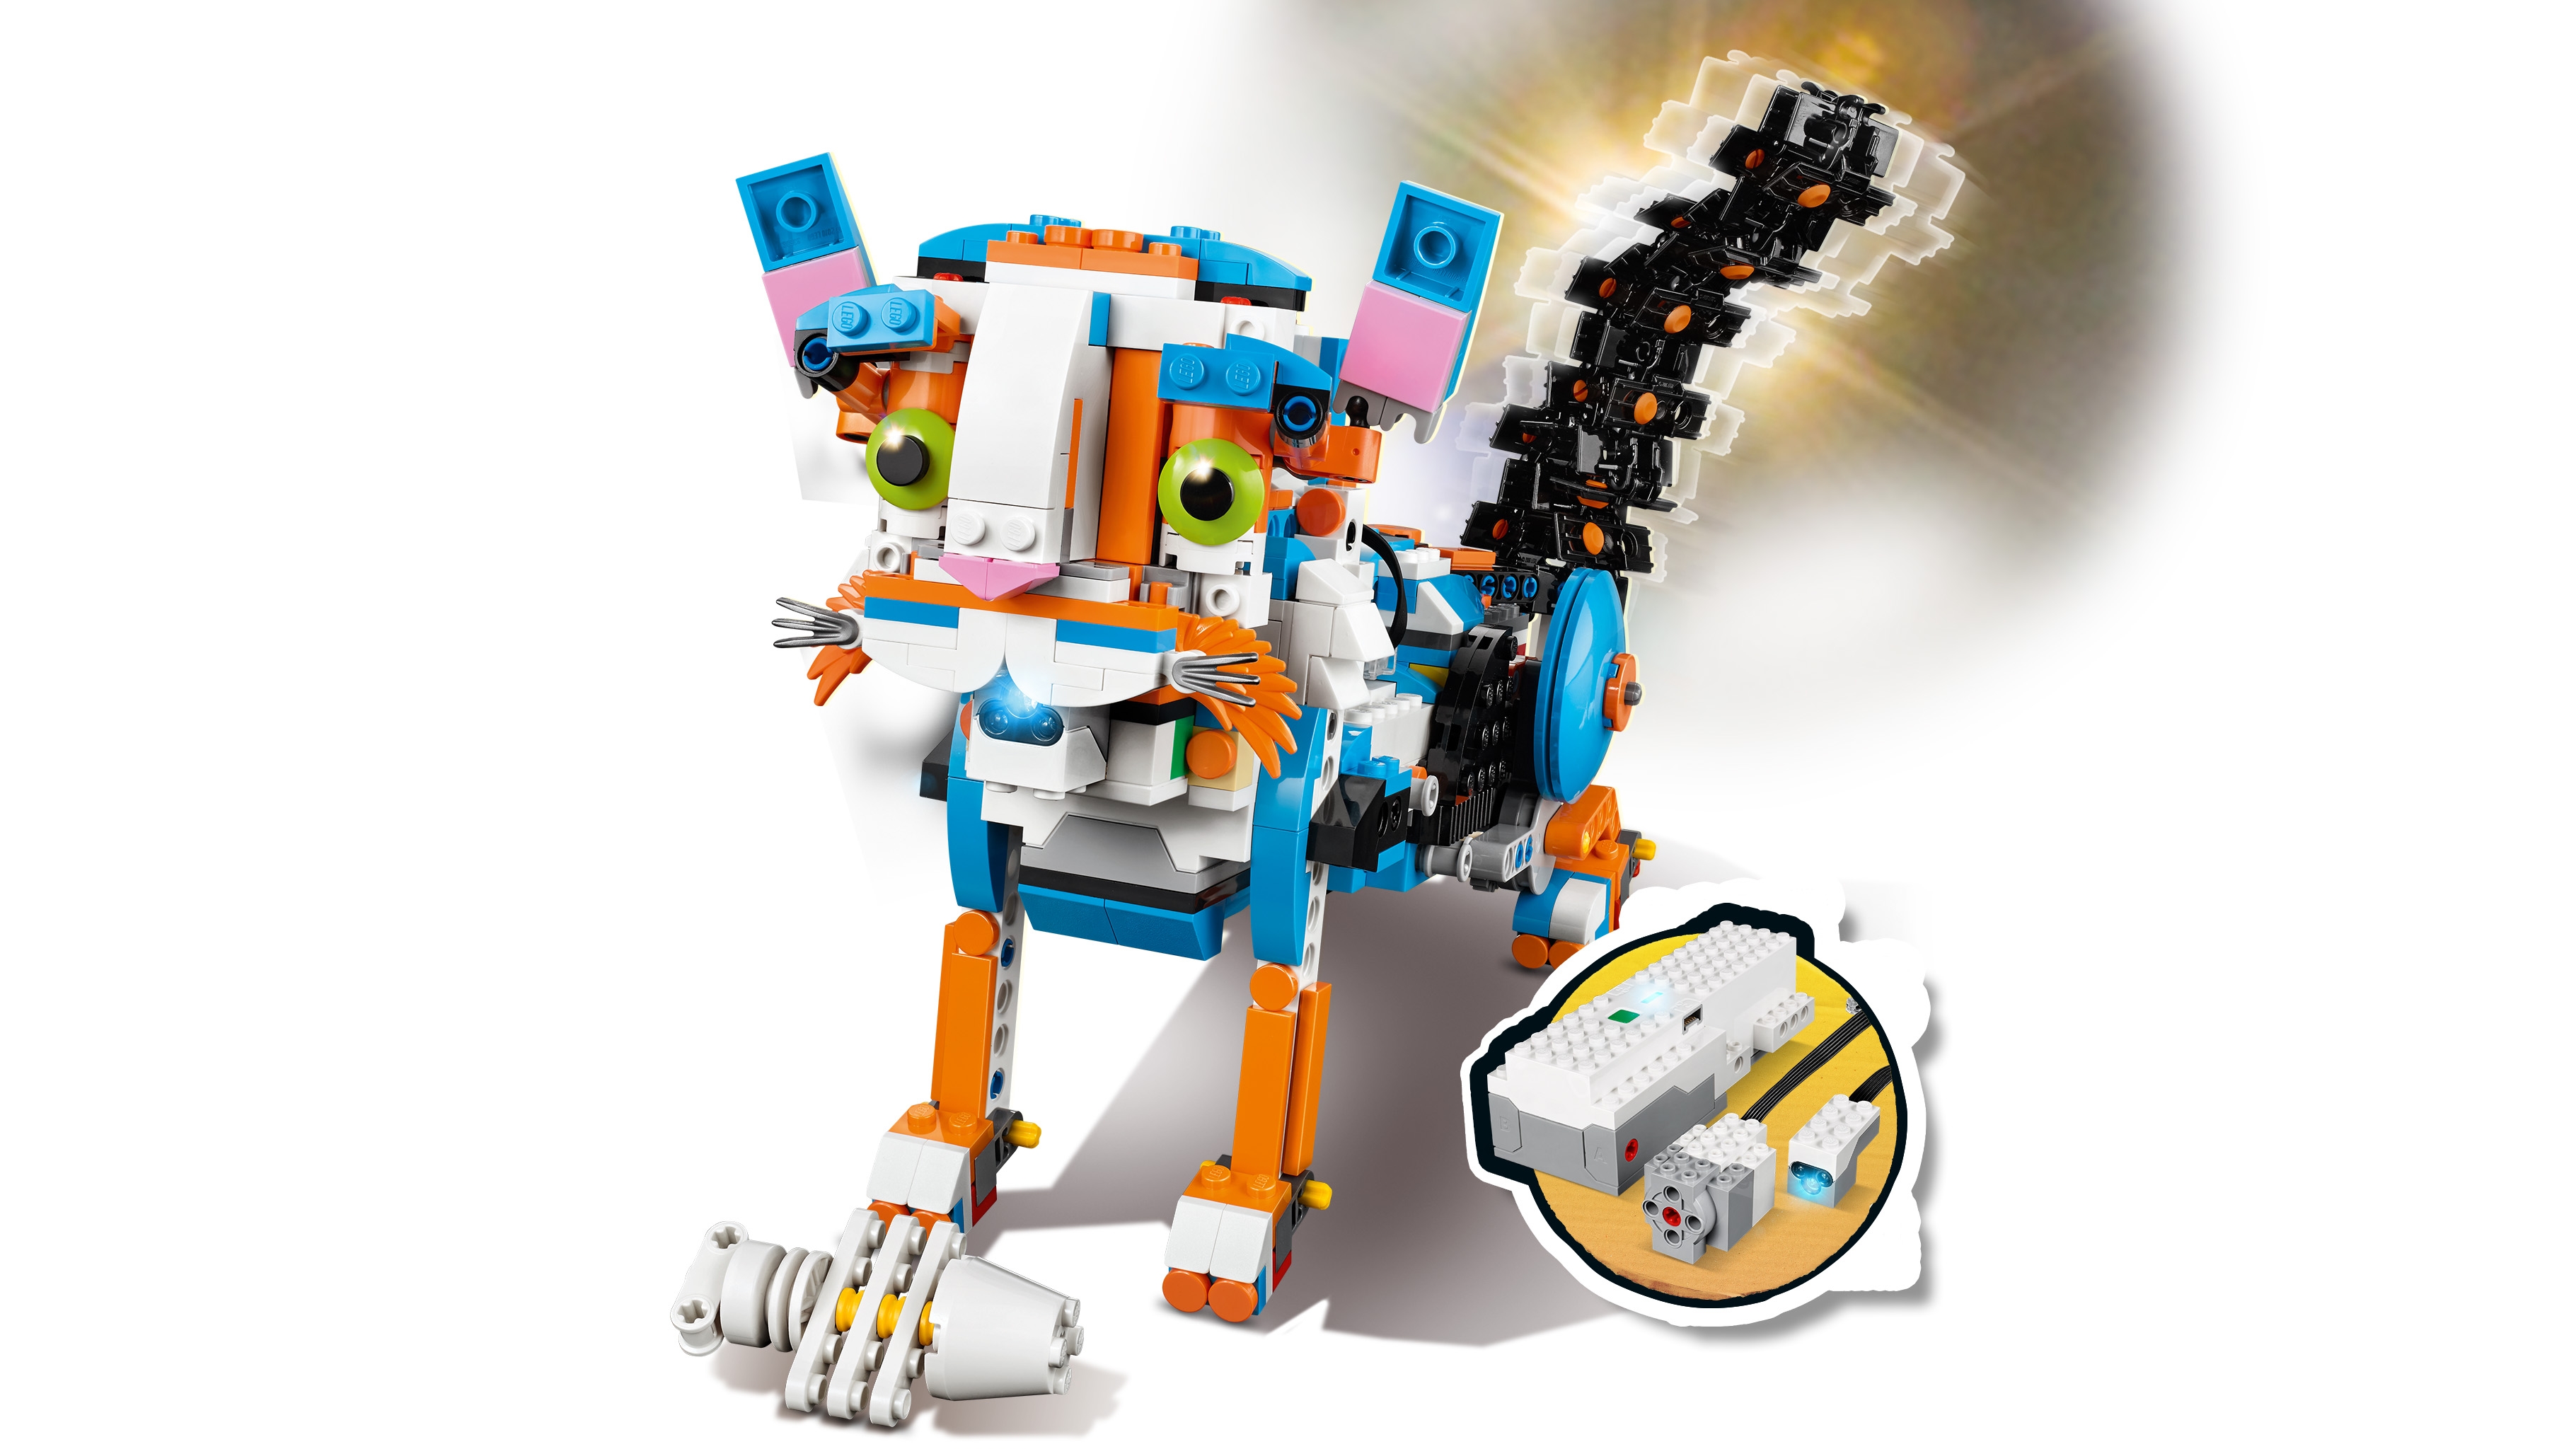 Creative Toolbox 17101 - LEGO® BOOST Sets - LEGO.com for kids